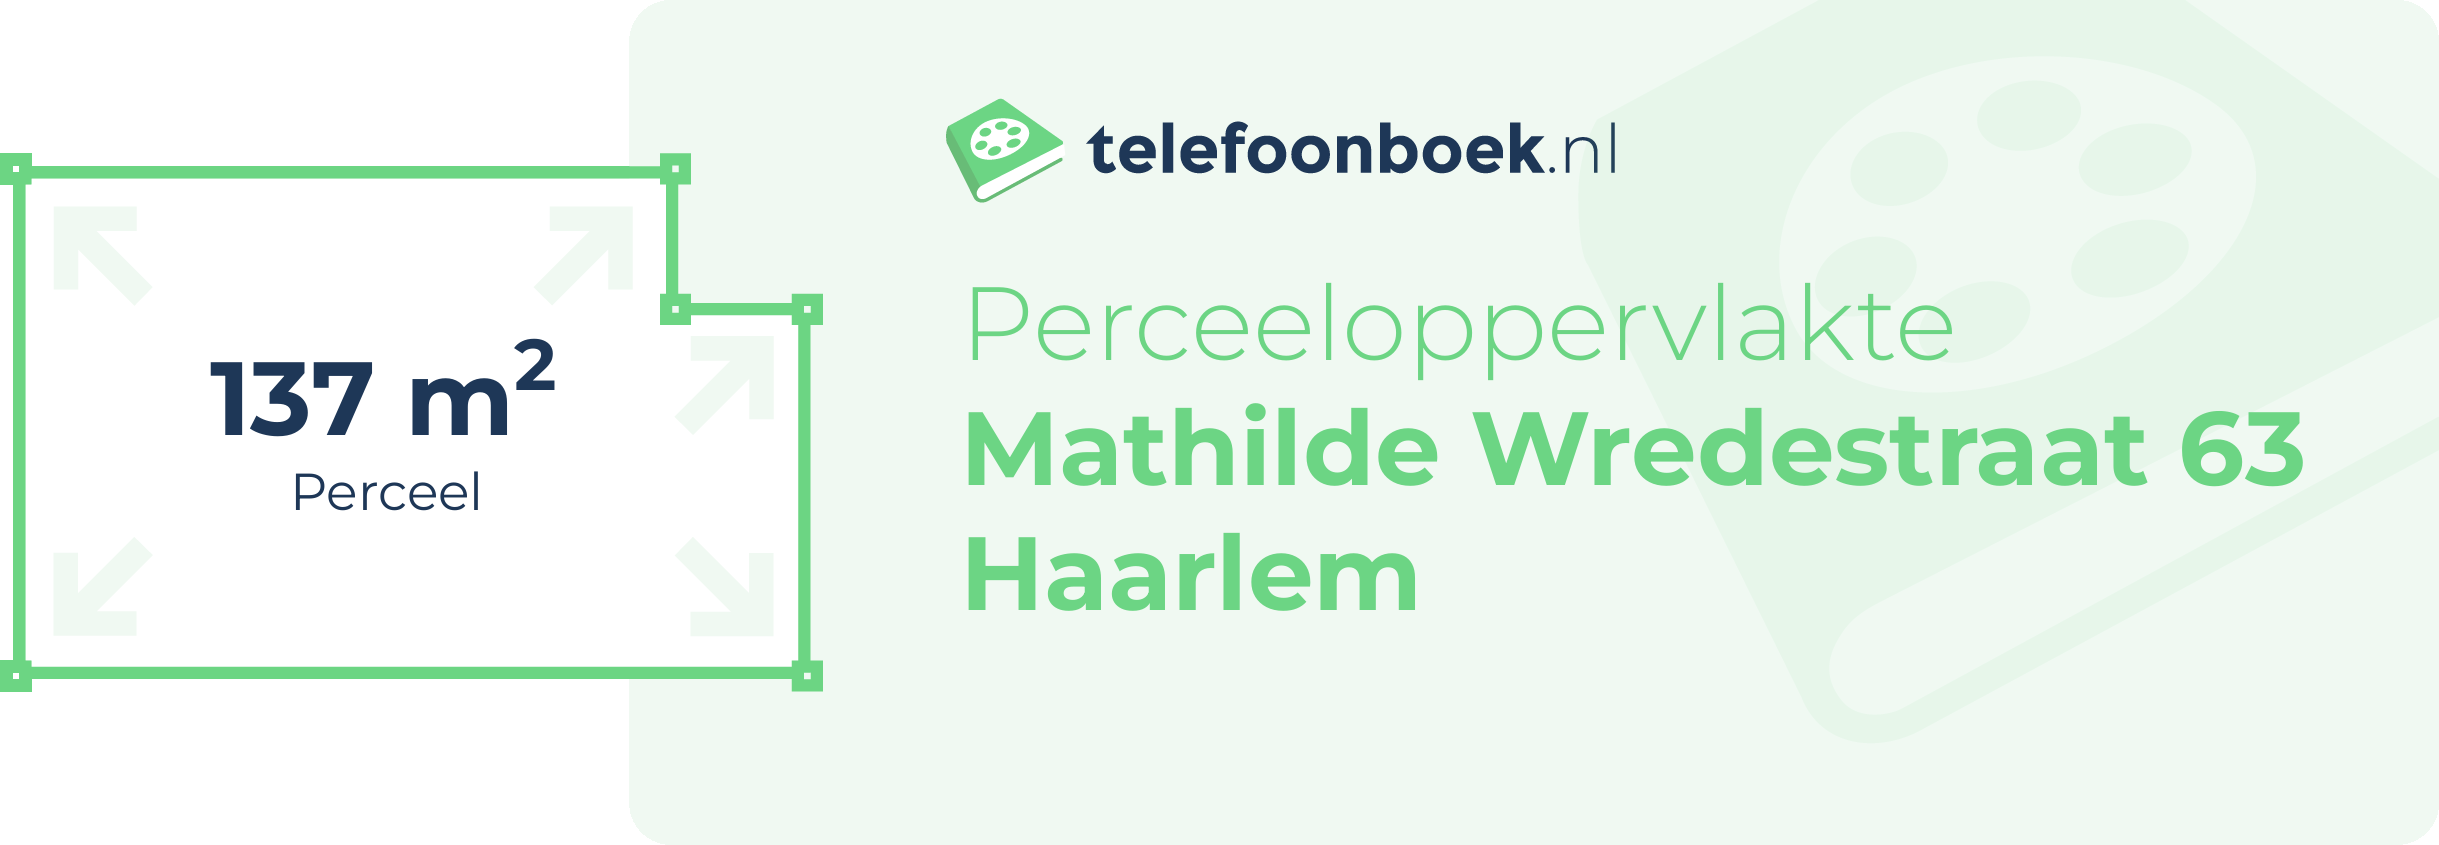 Perceeloppervlakte Mathilde Wredestraat 63 Haarlem